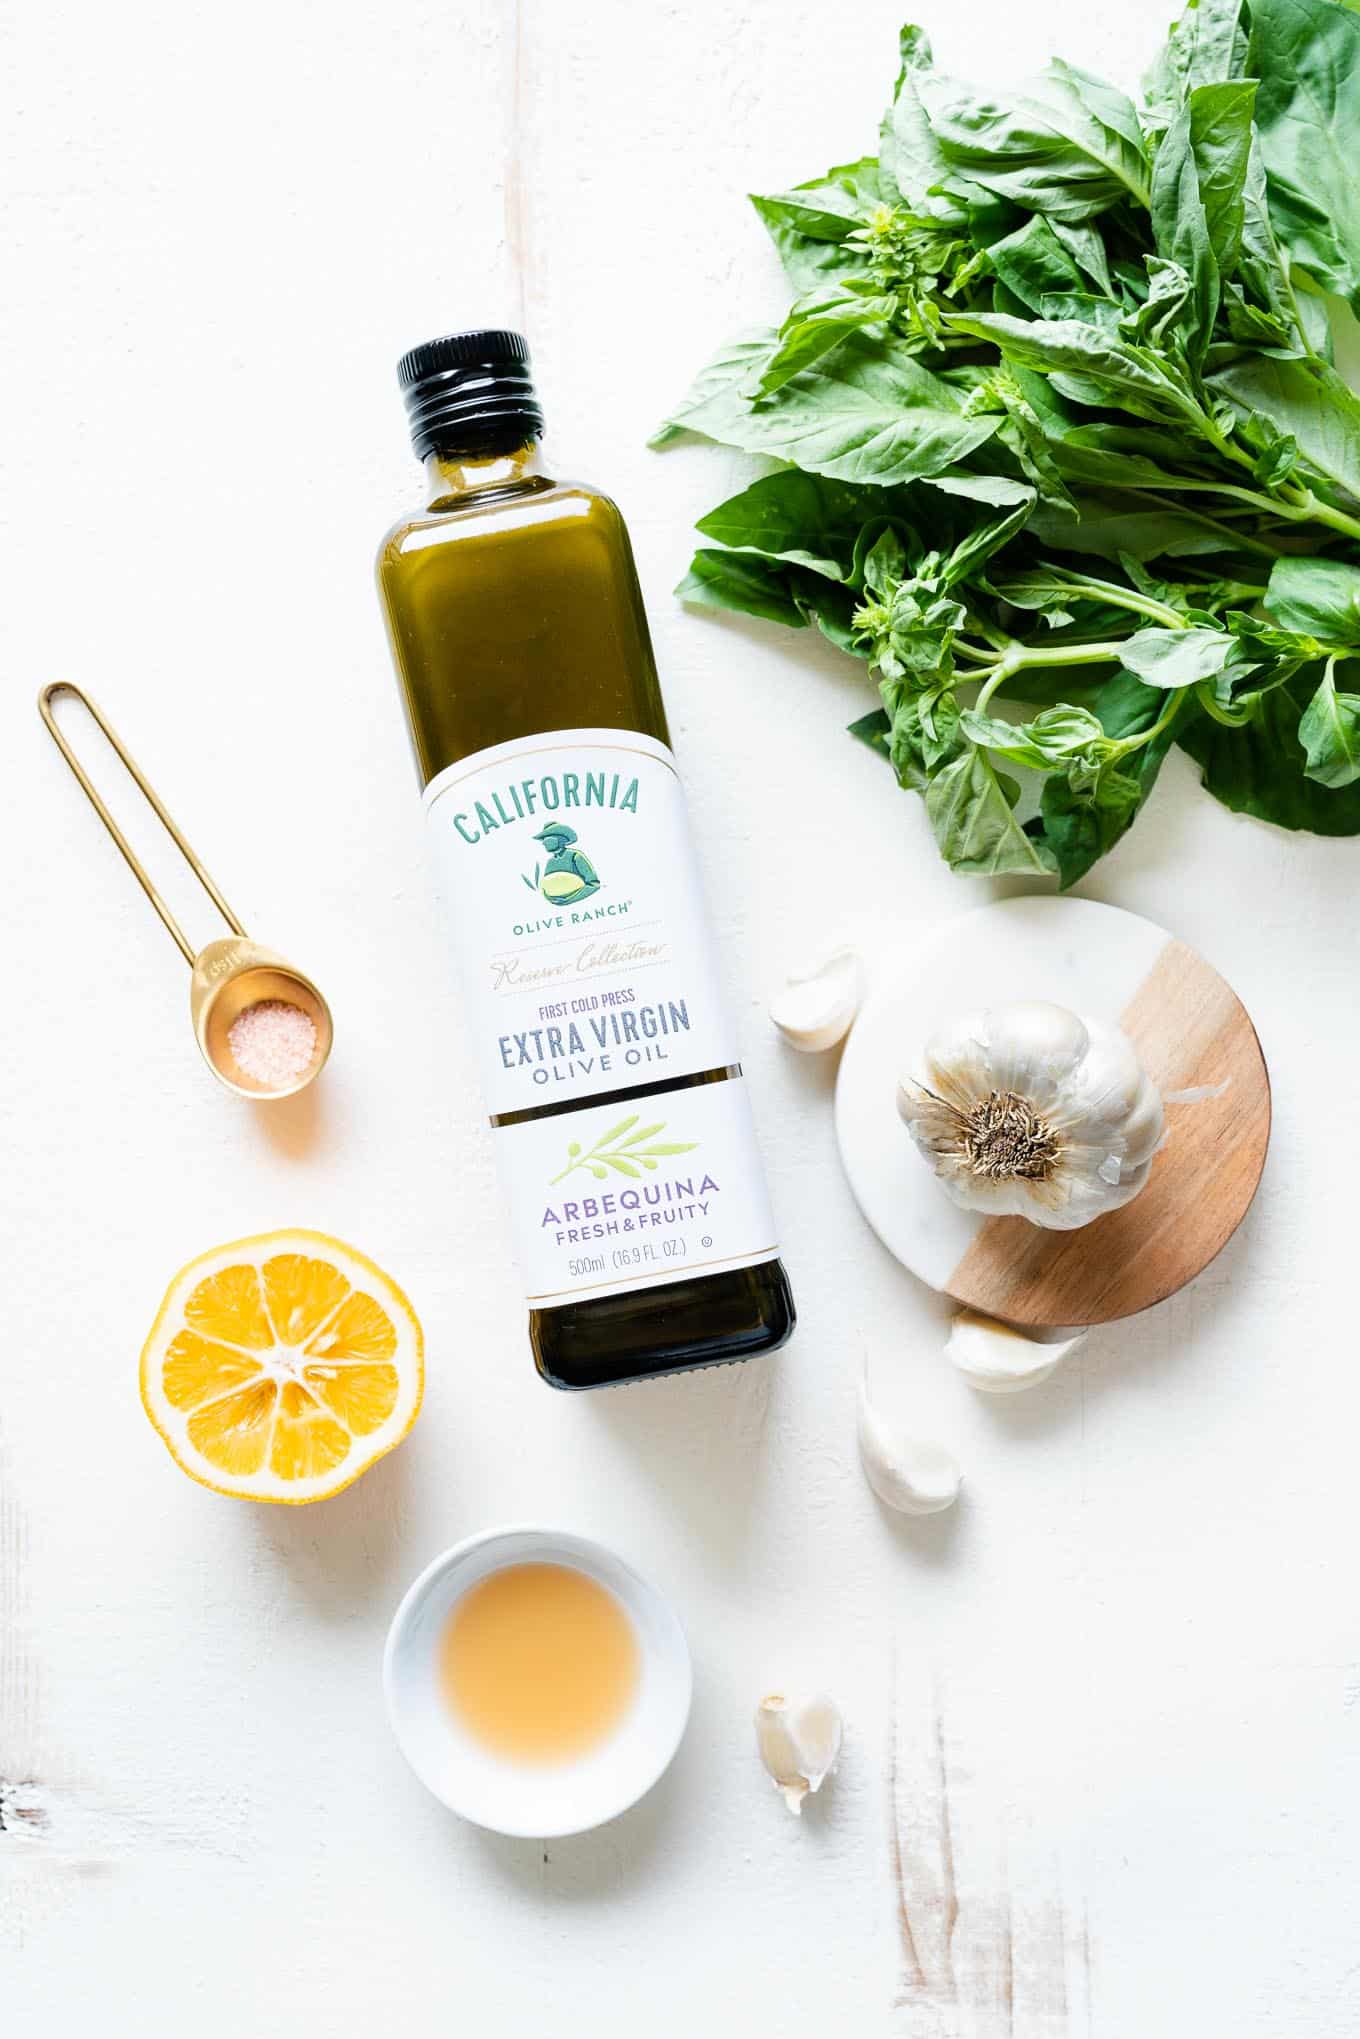 olive oil lemon garlic and apple cider vinegar with fresh basil